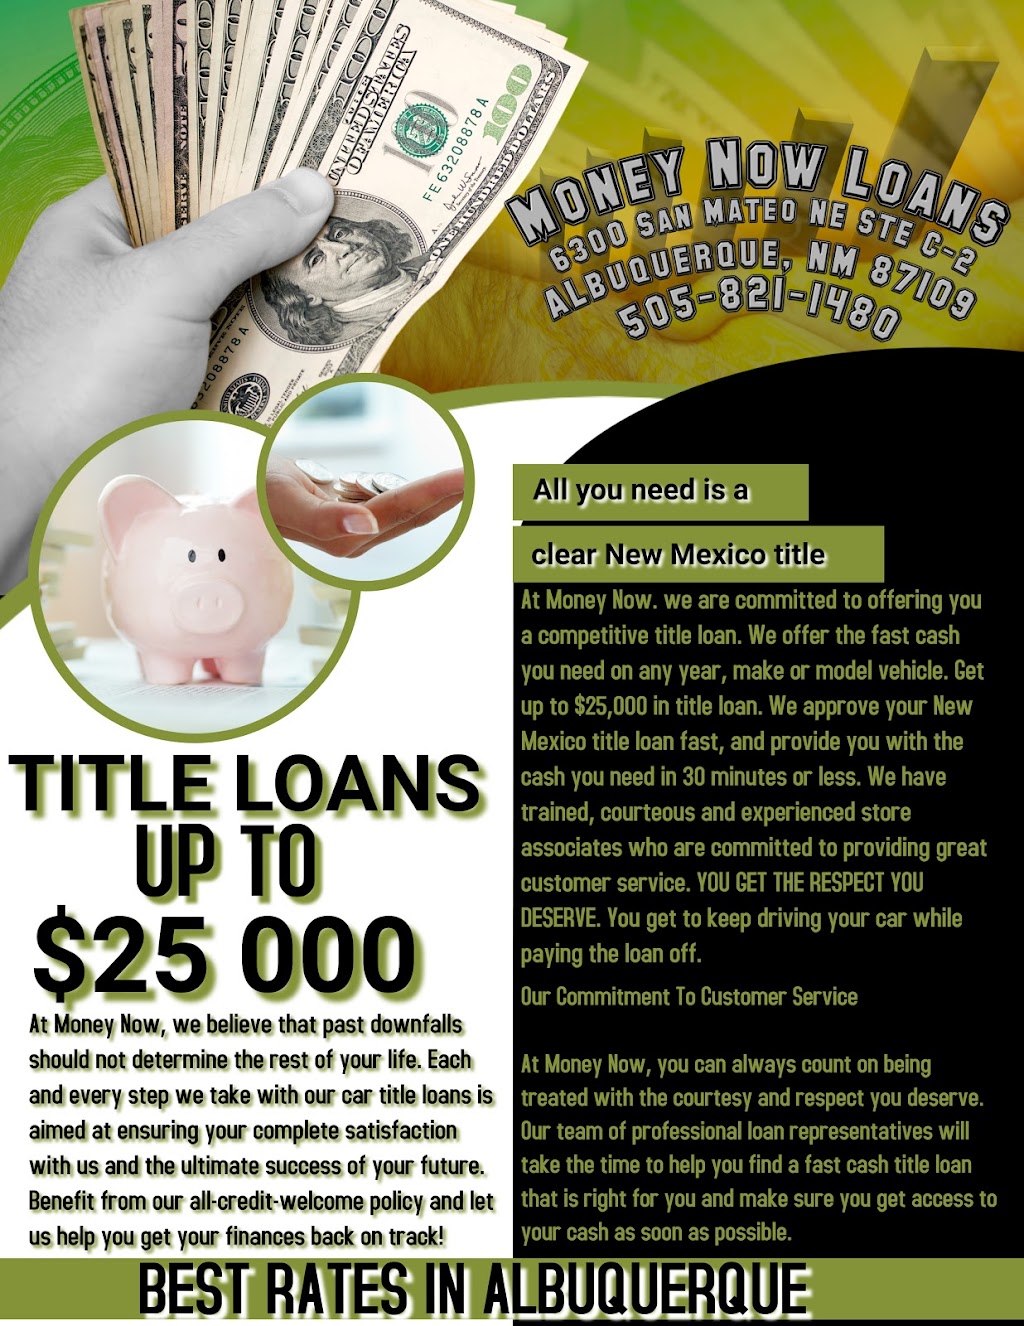 Money Now Loans | 6300 San Mateo Blvd NE c-2, Albuquerque, NM 87109, USA | Phone: (505) 821-1480